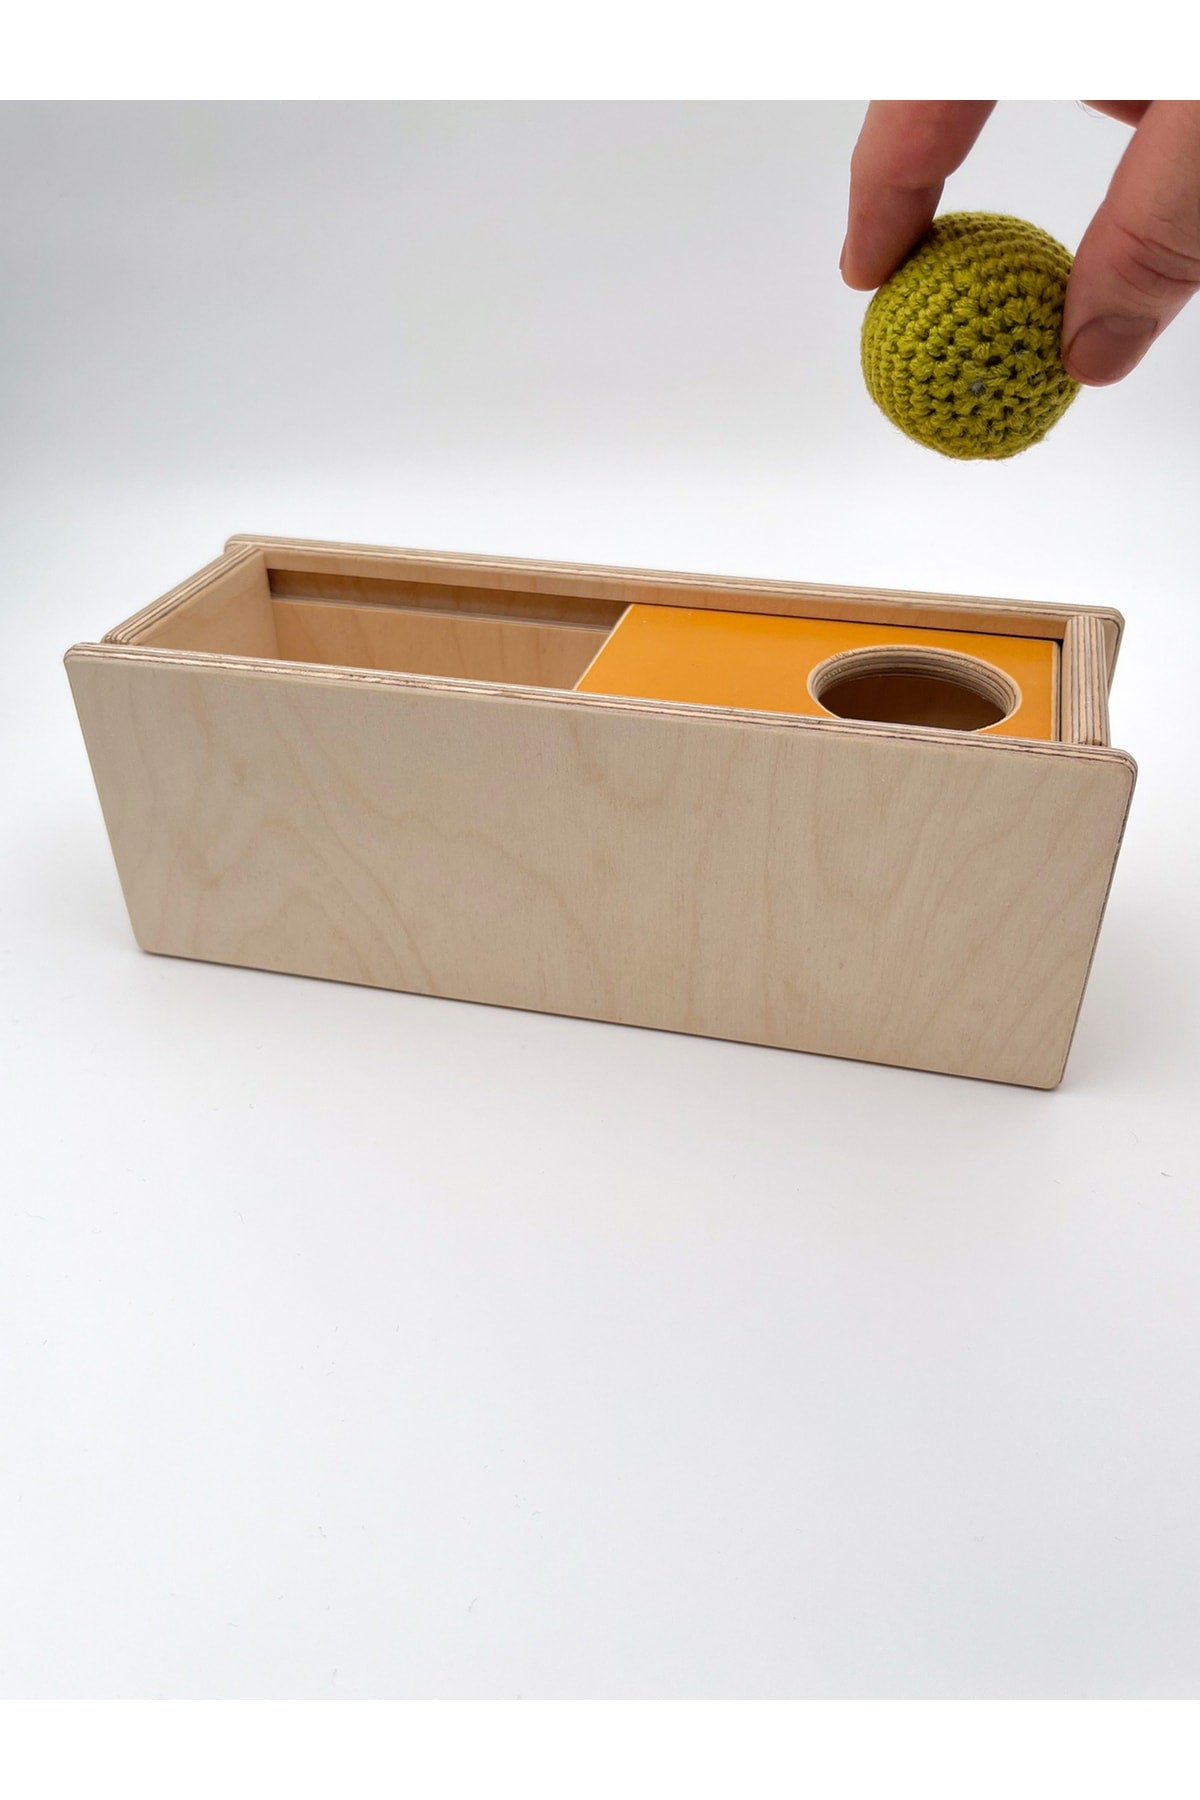 Montessori Top Sliding Box Toy , Object Persistence Box